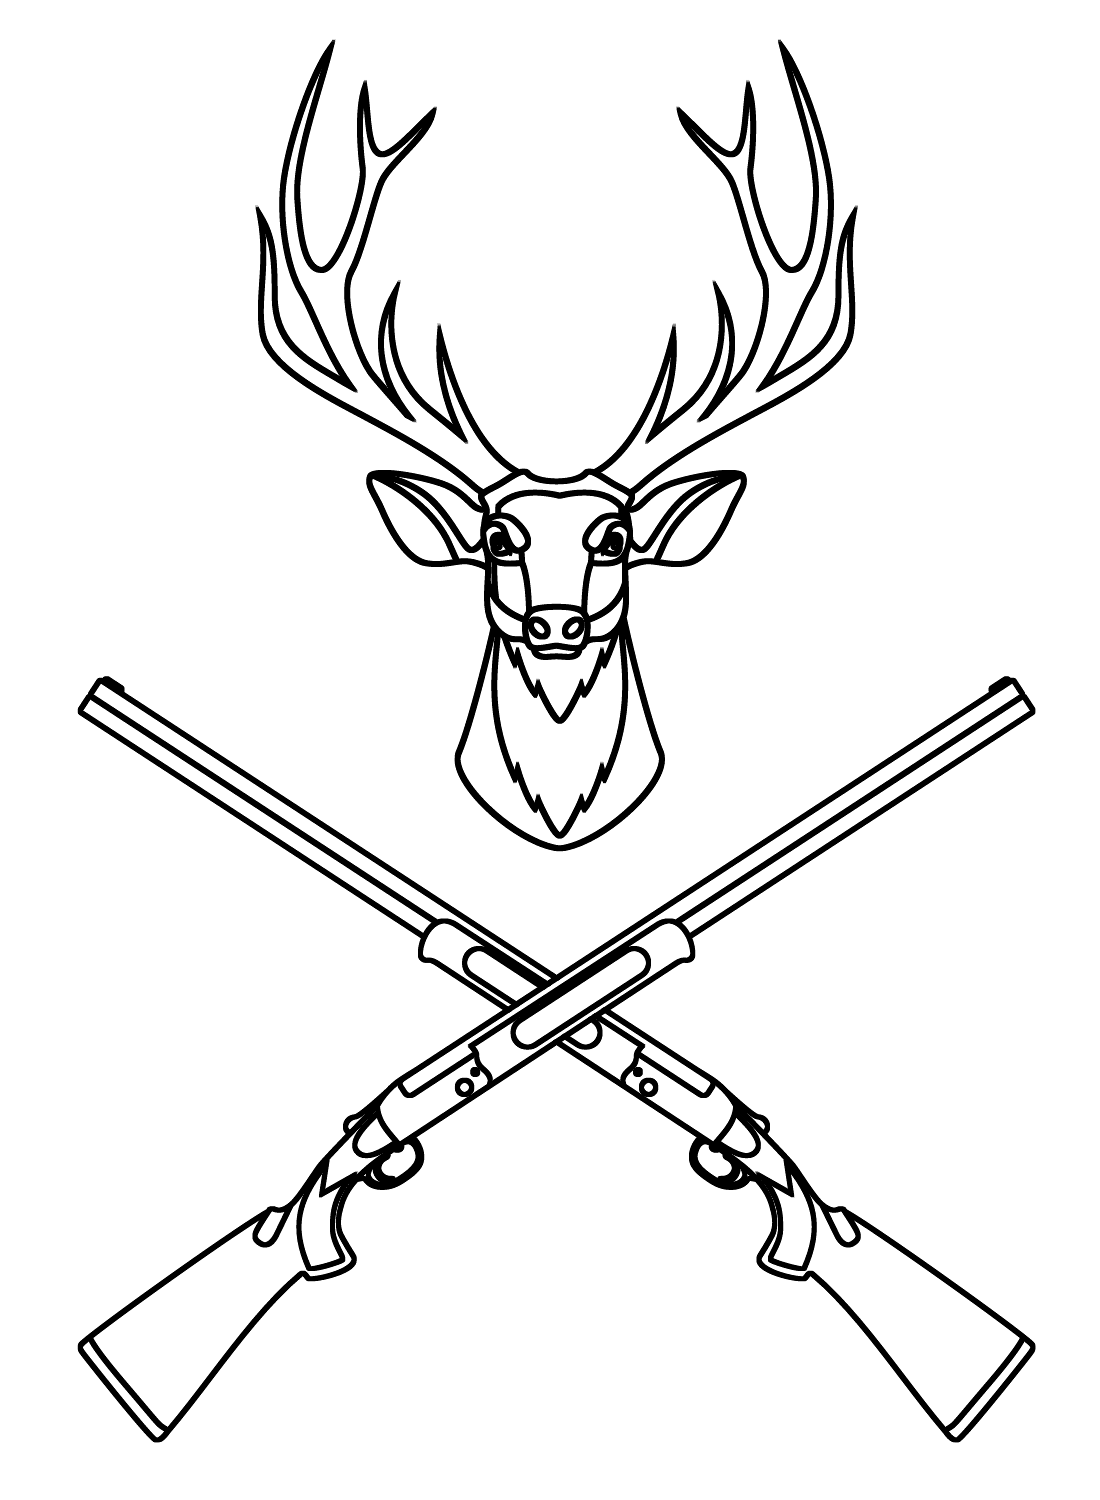 Deer Head and Crossed Hunting Rifles Coloring Page